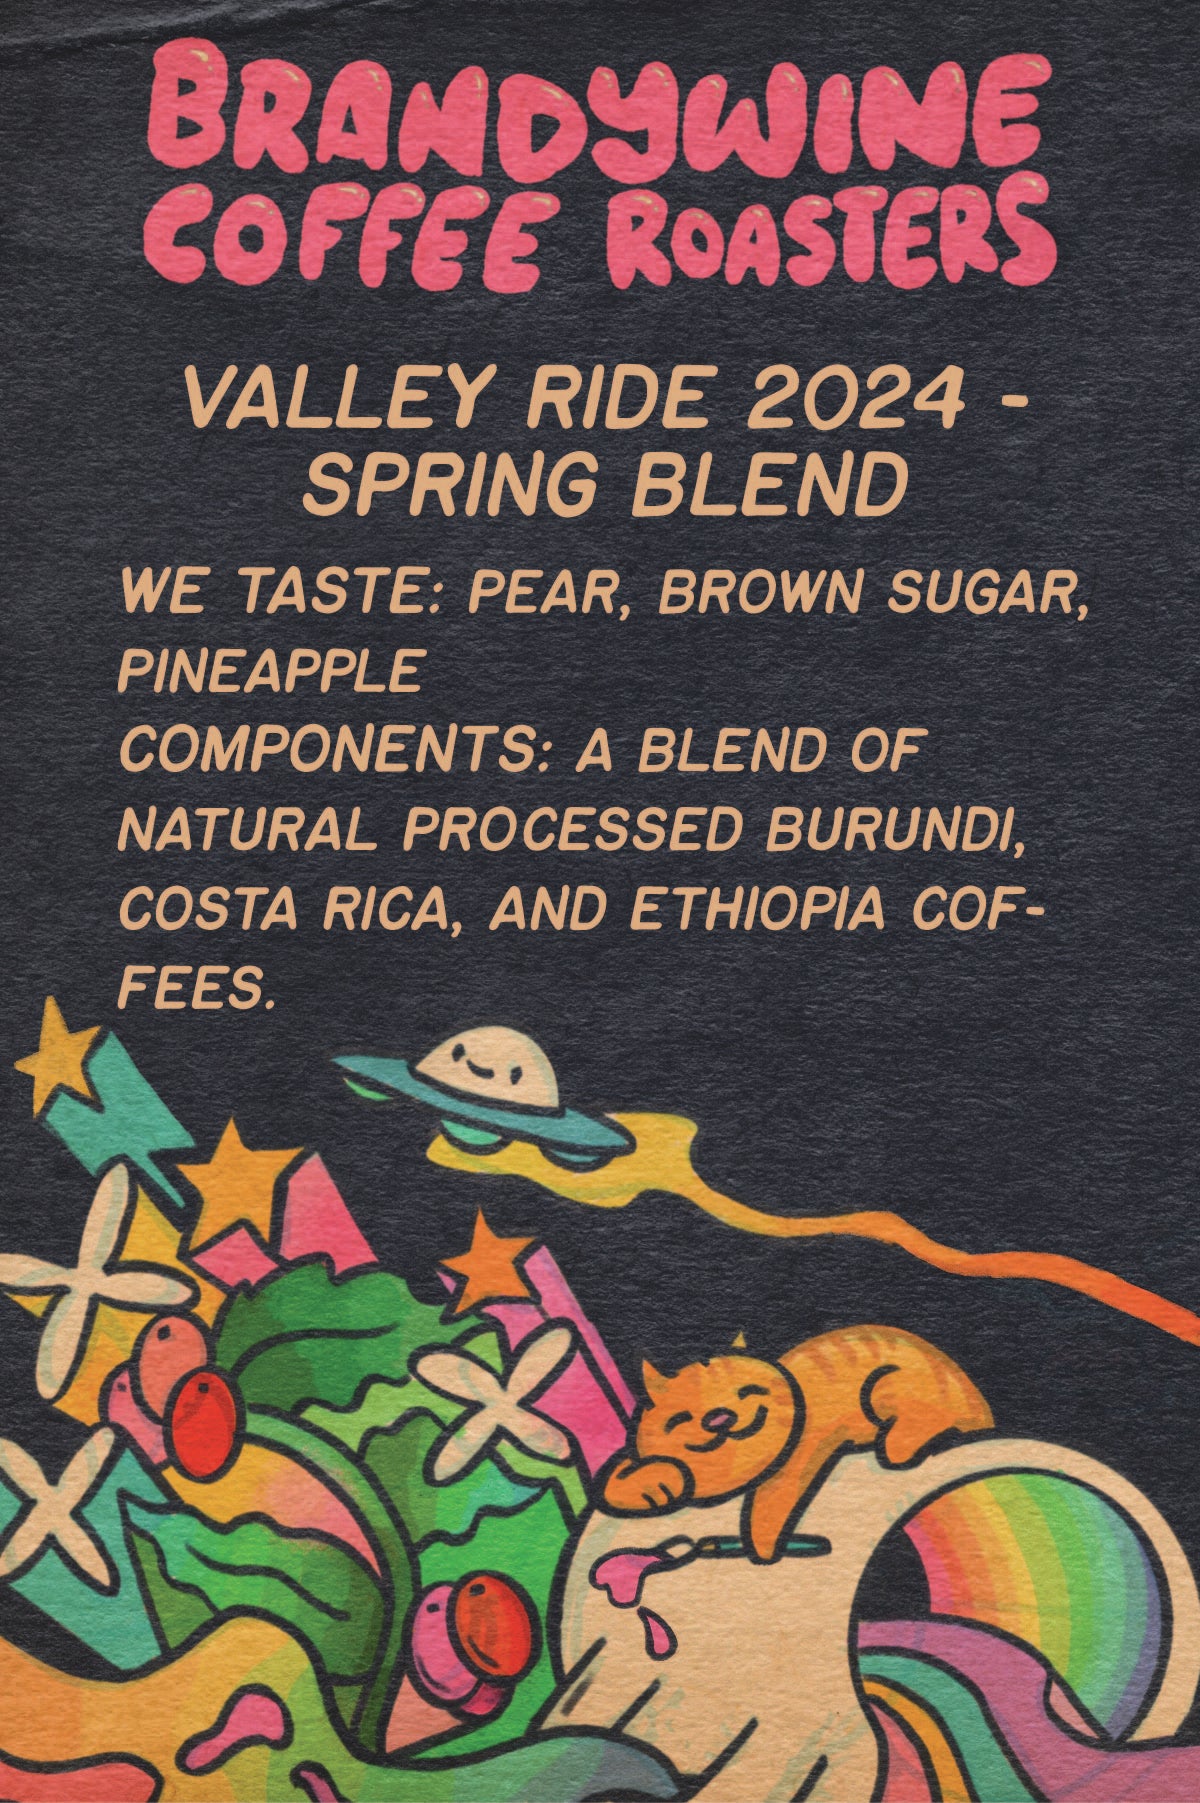 Valley Ride 2024 - Spring Blend